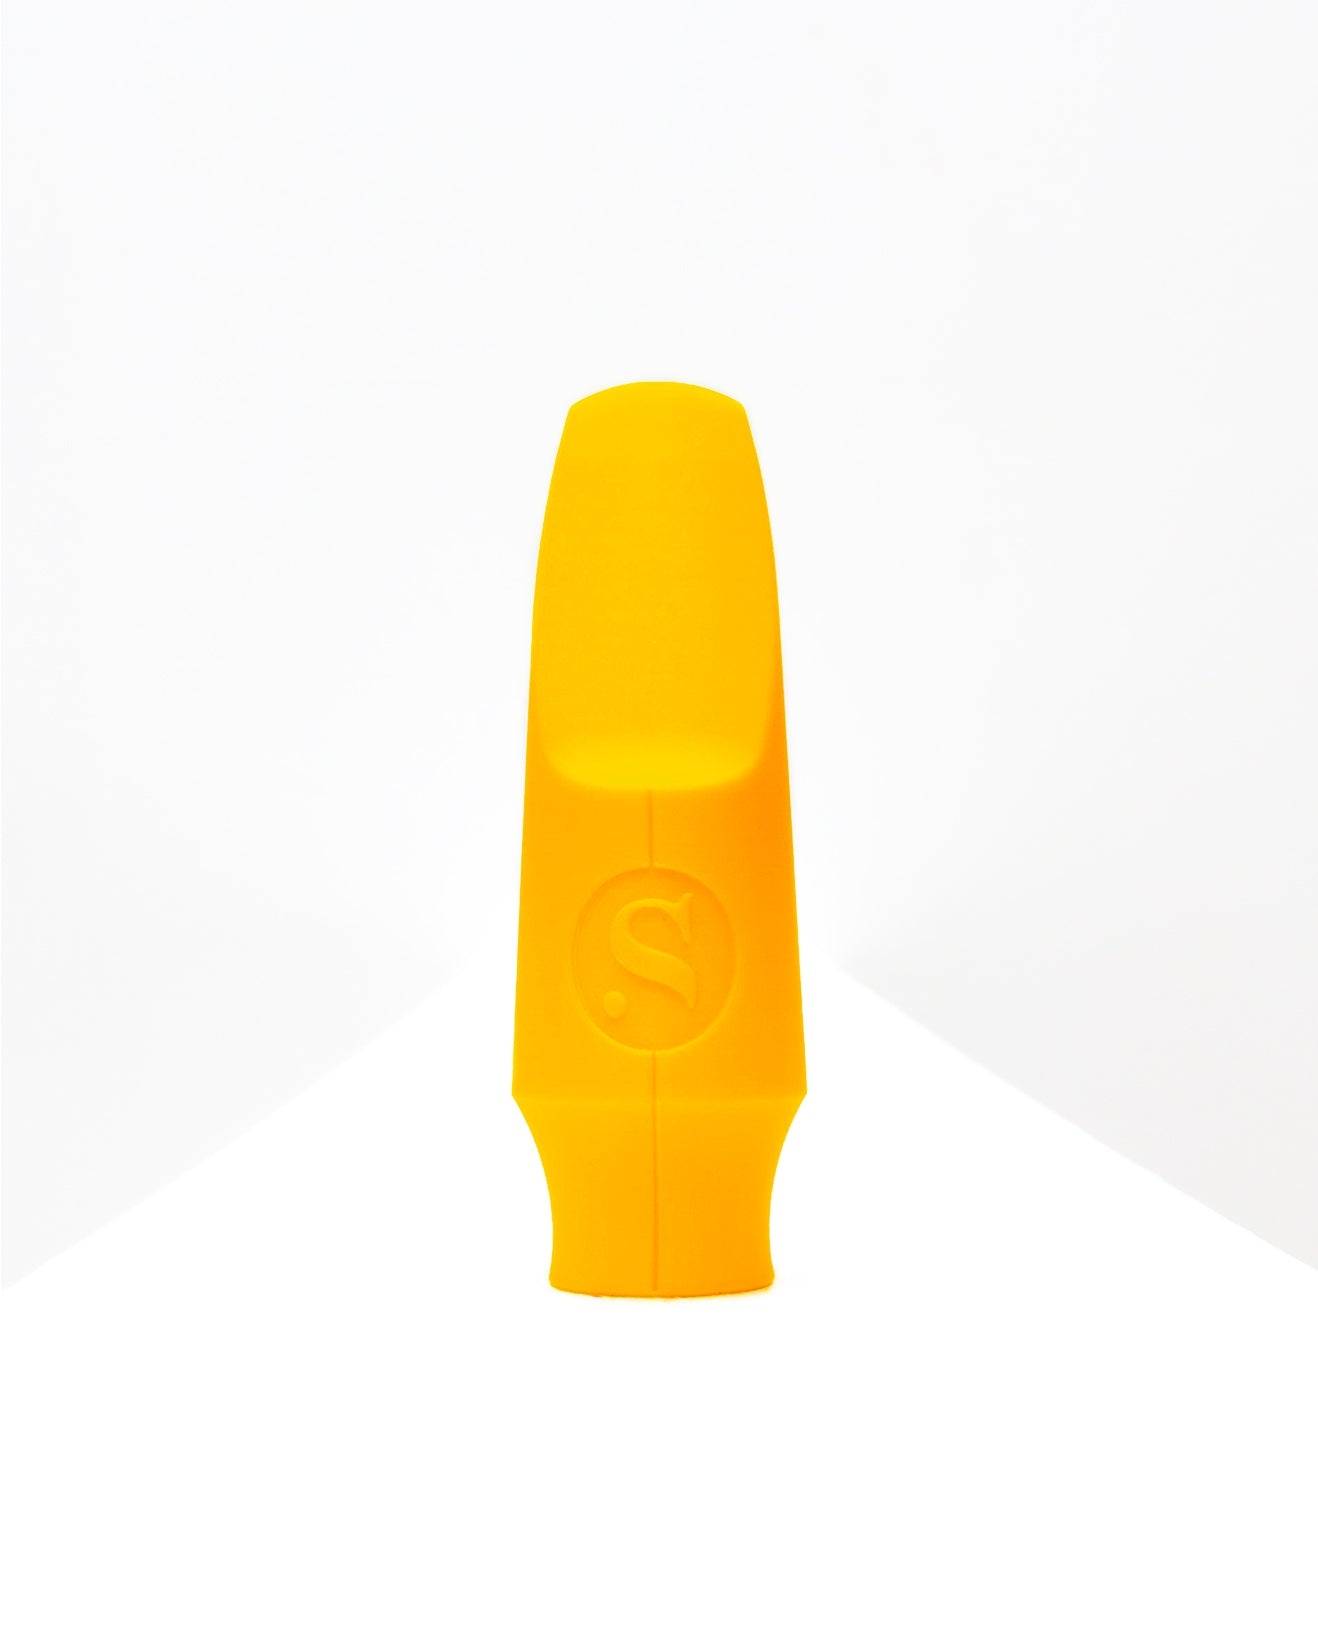 Alto Signature Saxophone mouthpiece - Knoel Scott by Syos - 9 / Mellow Yellow